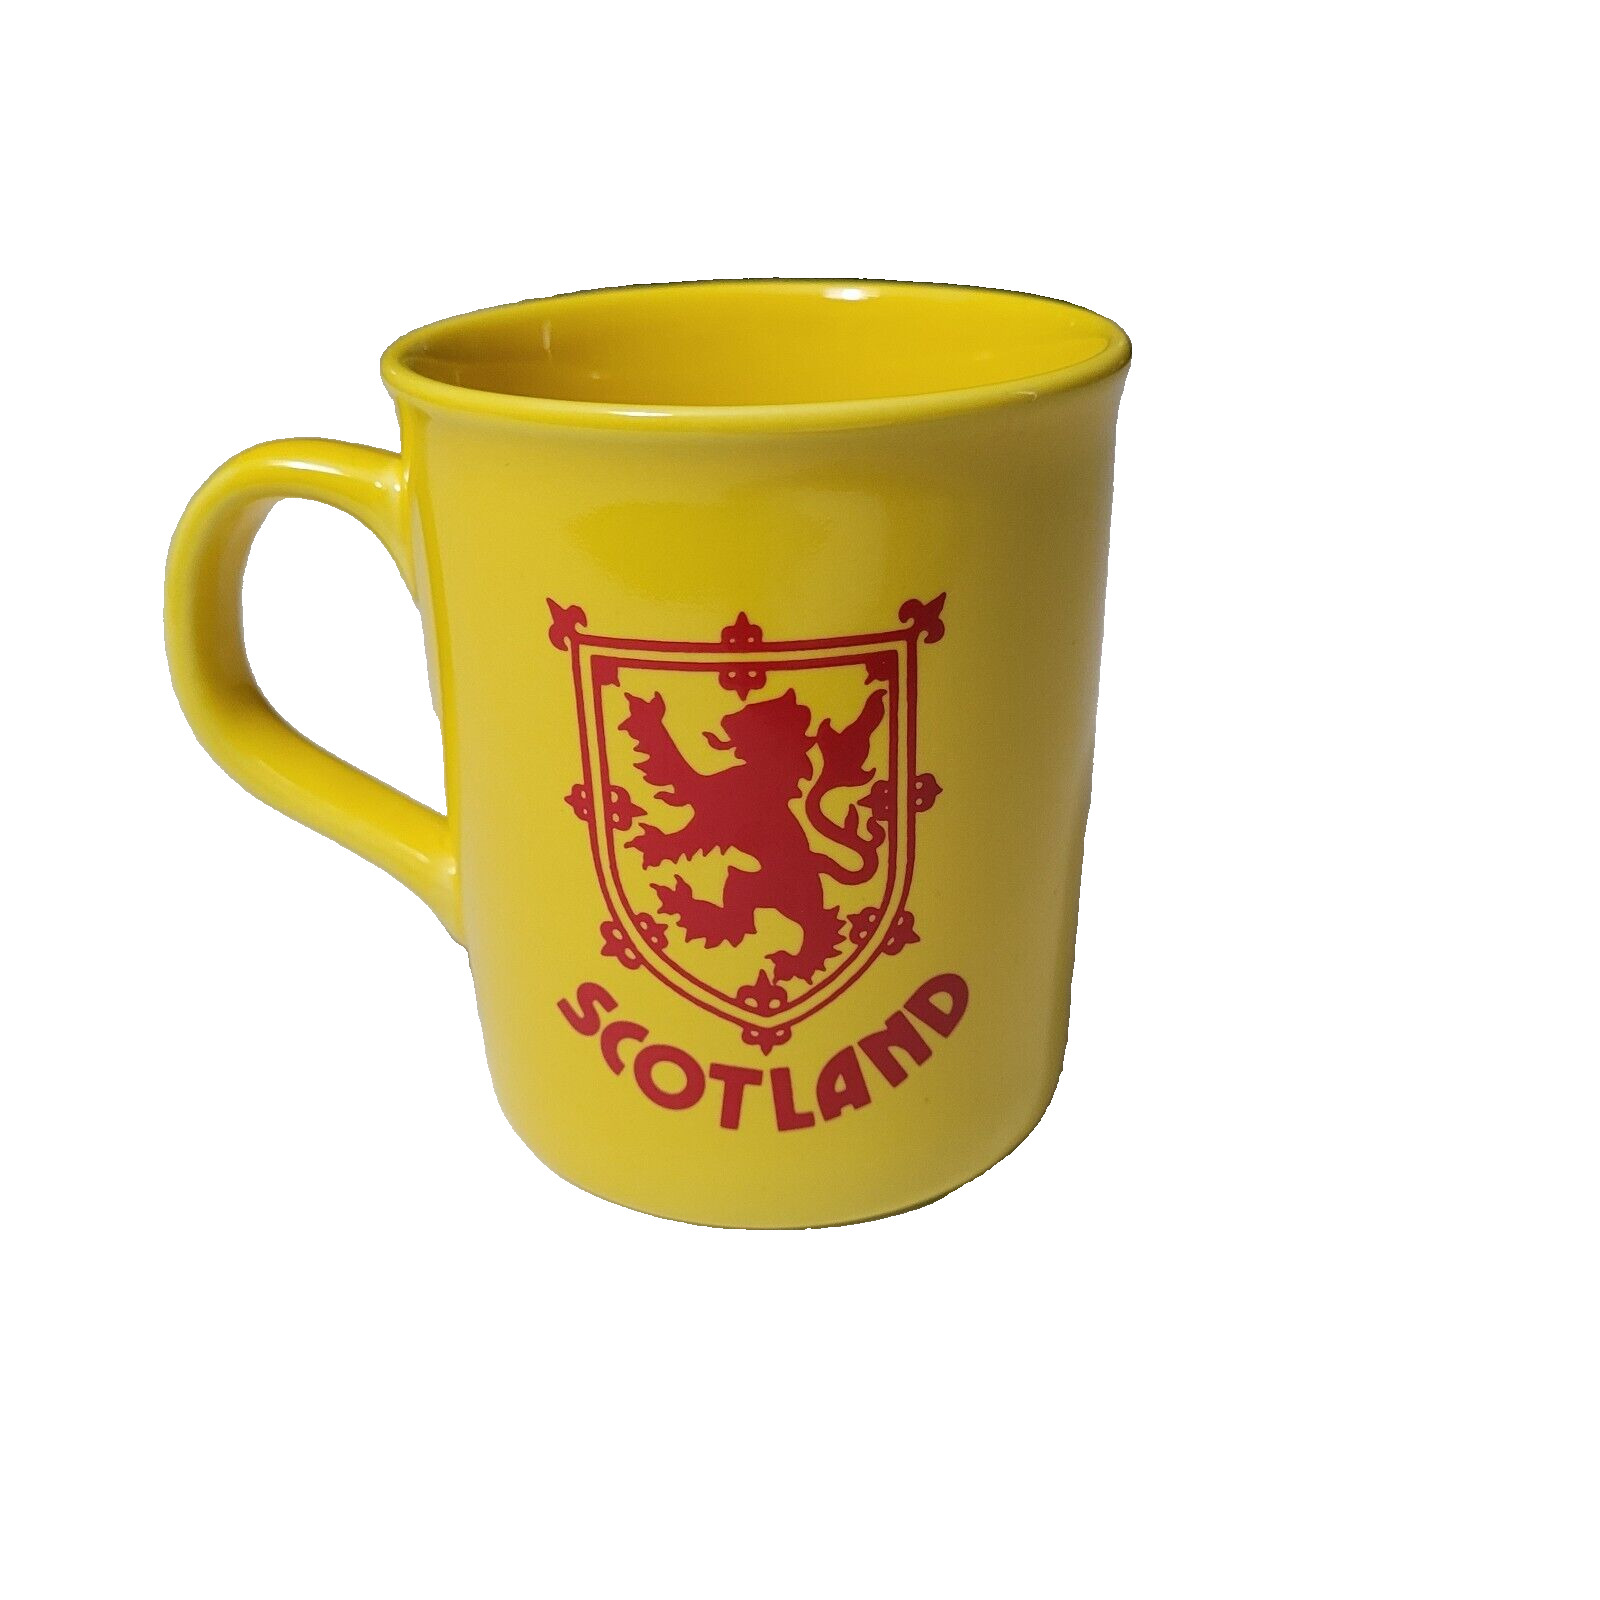 Vintage Scotland Mug Made In England Yellow